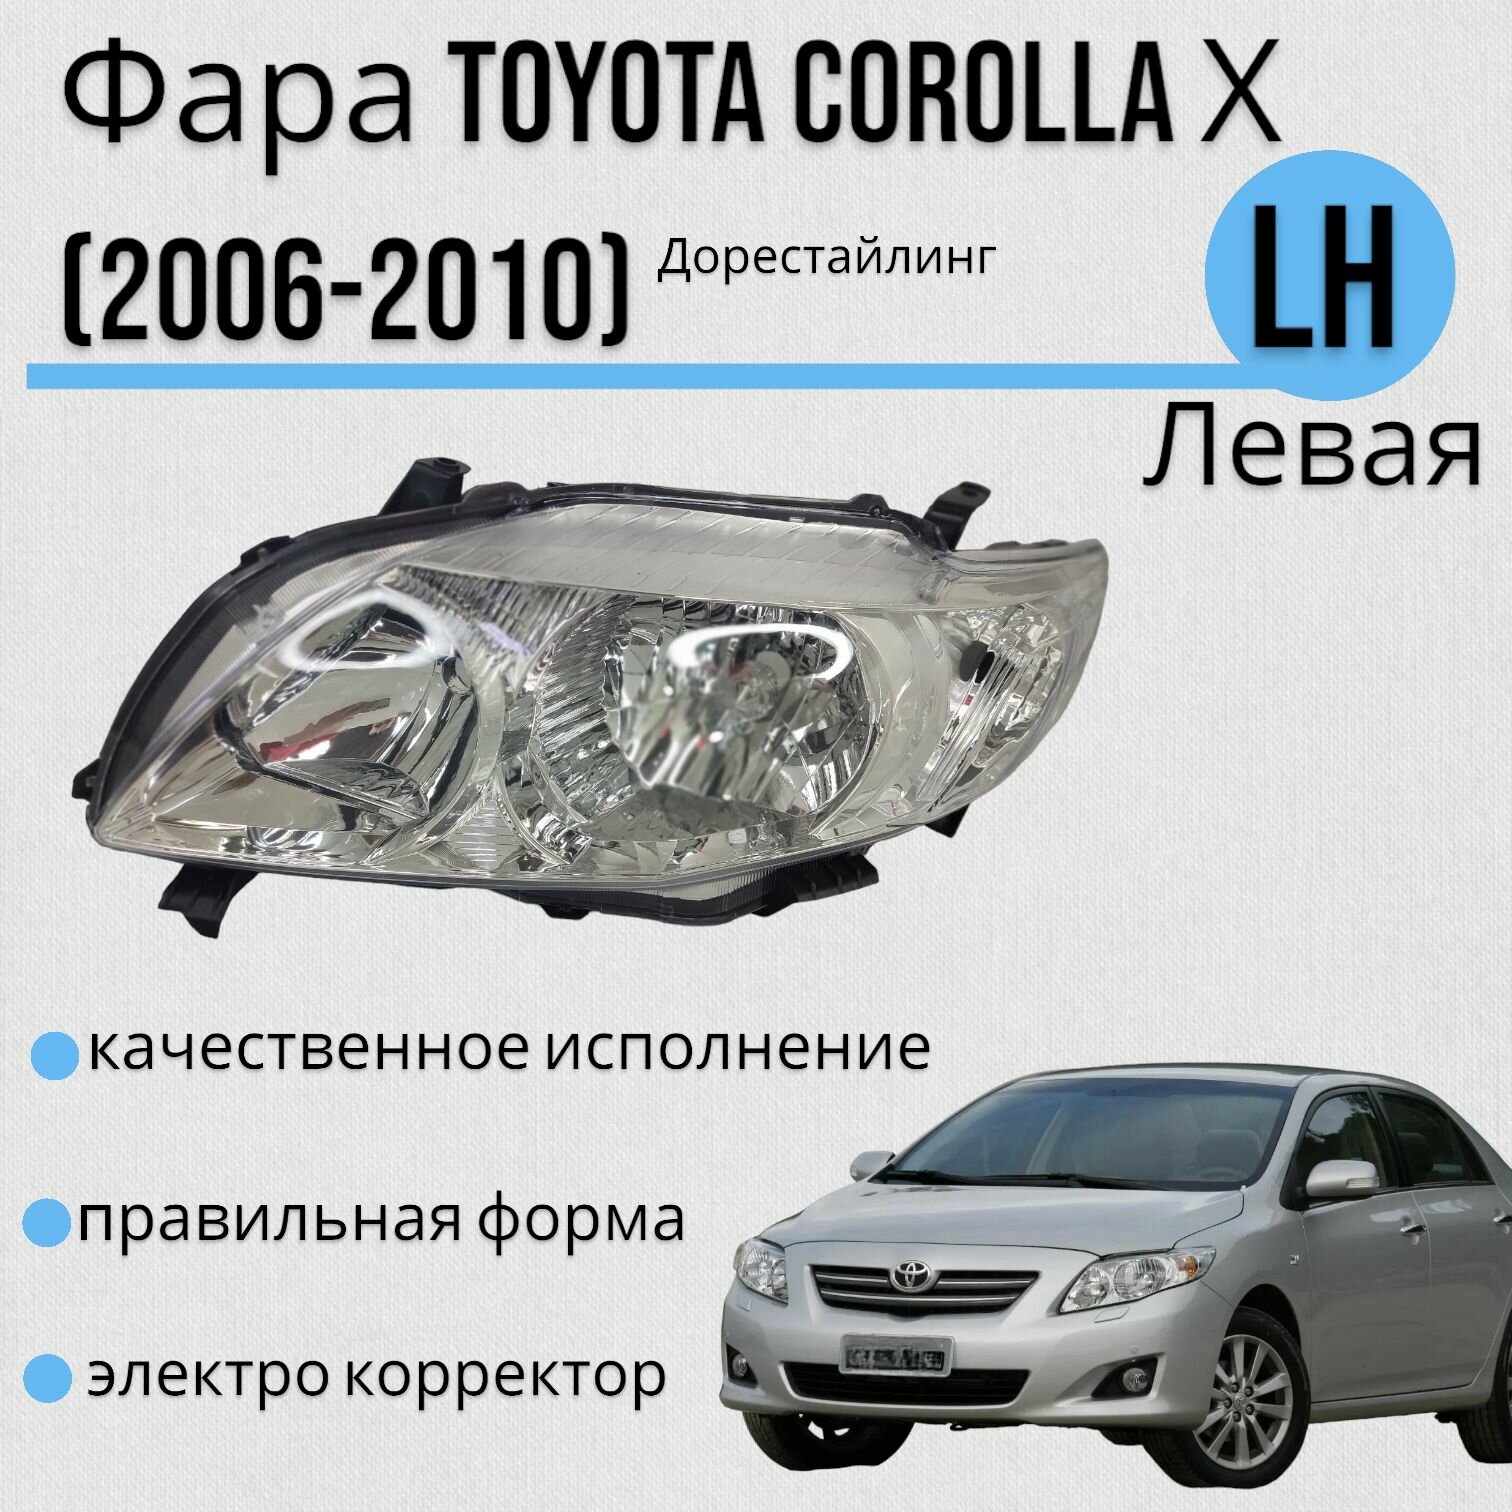 Фара Тойота Королла 10 (E140 E150) Toyota Corolla поколение (2006-2010) Электро корректор левая